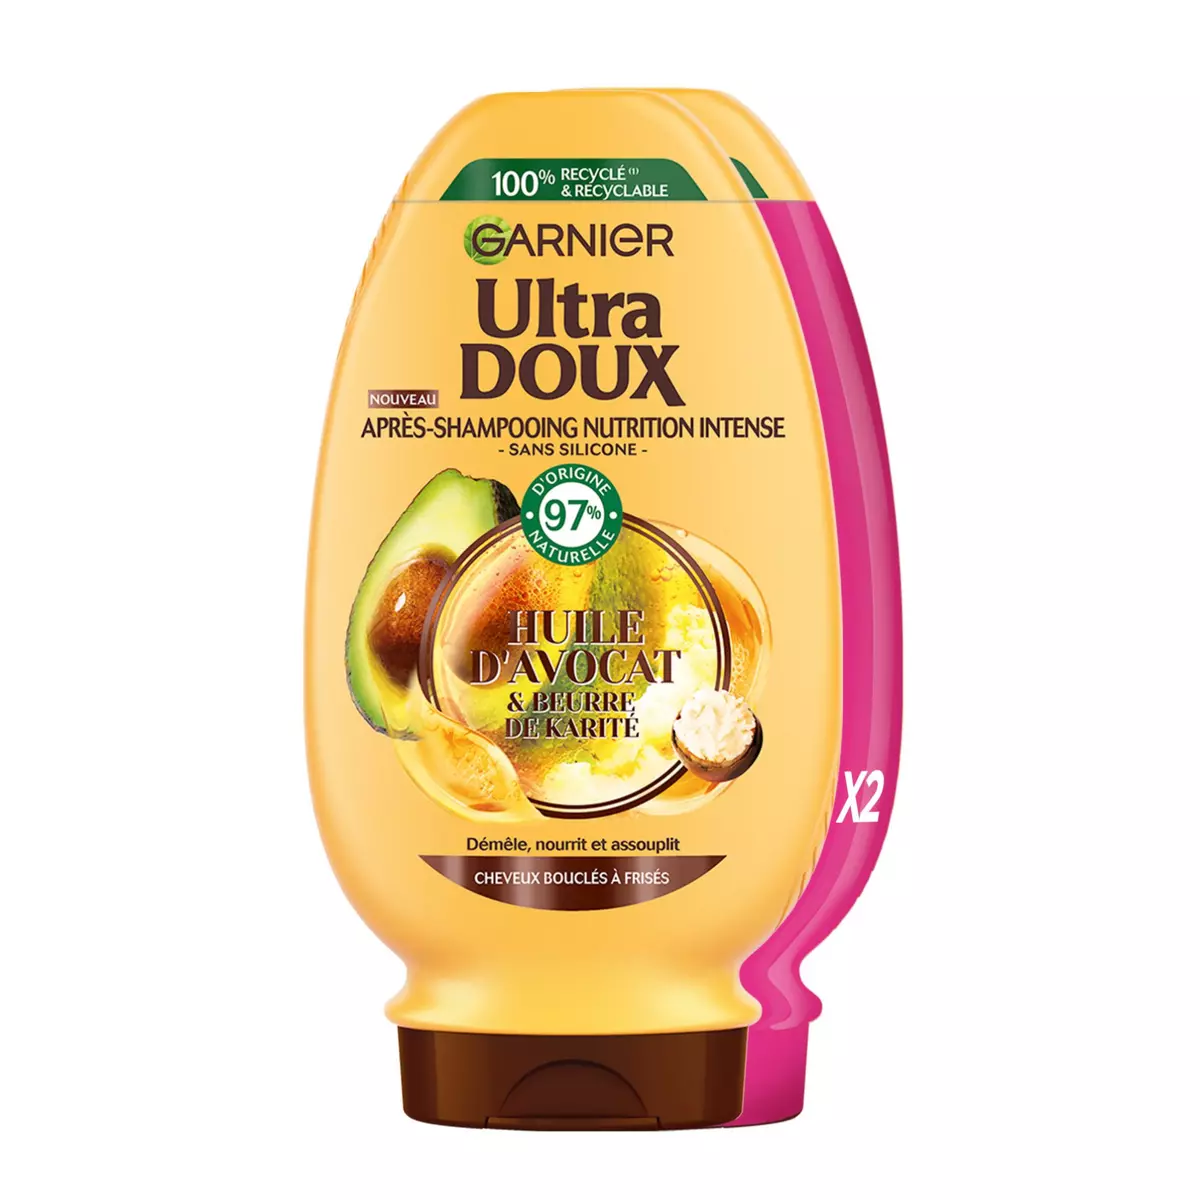 ULTRA DOUX Après-shampooing nutrition intense avocat karité 2x250ml